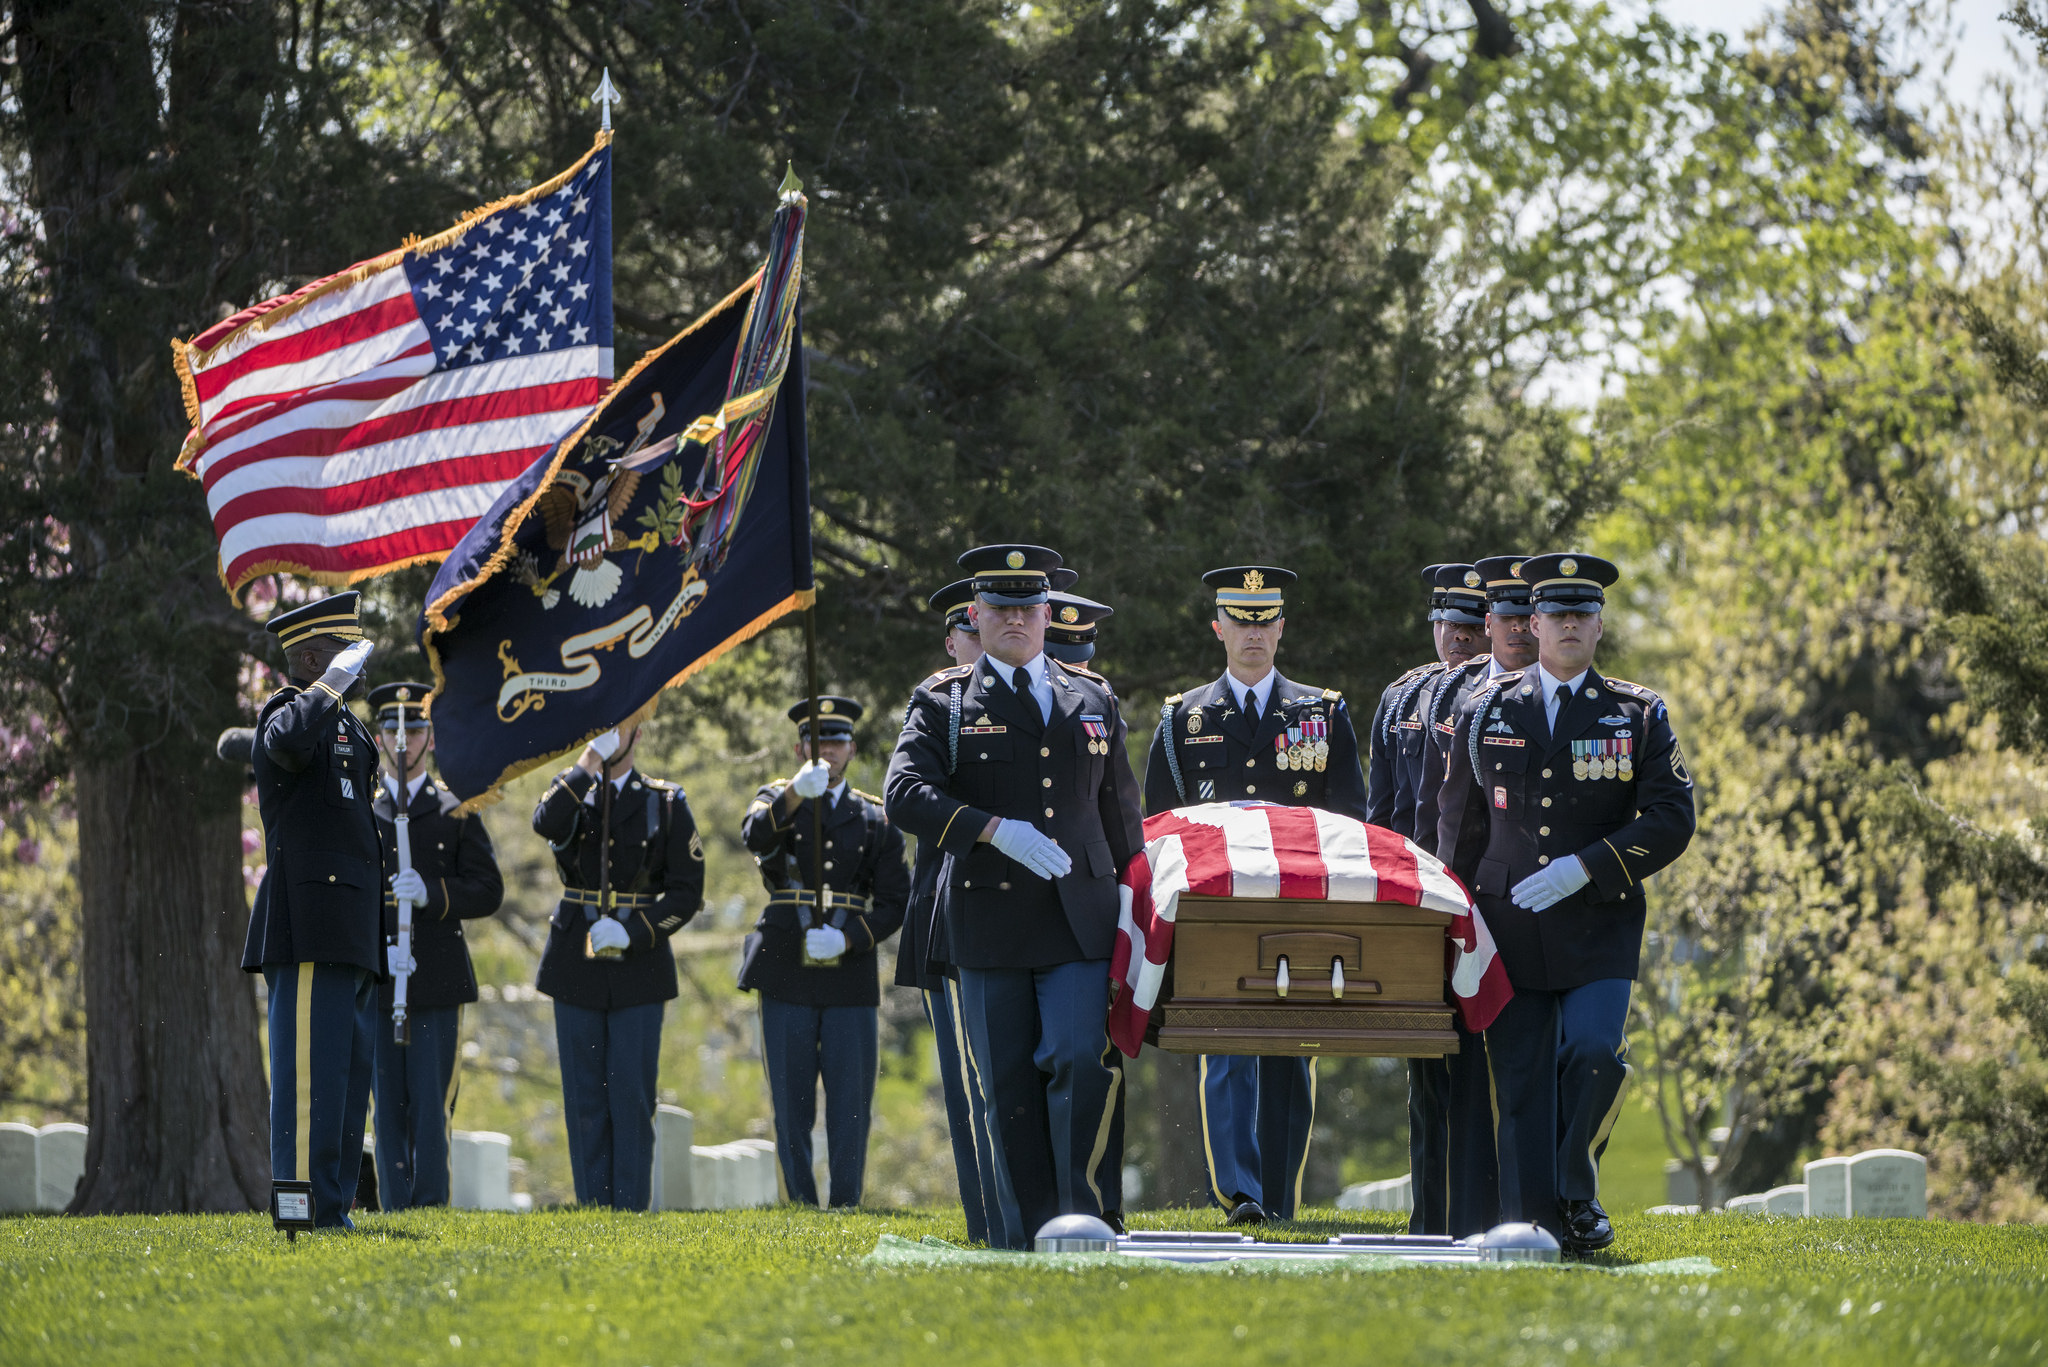 Soldiers in dress uniform carry a flag-draped casket